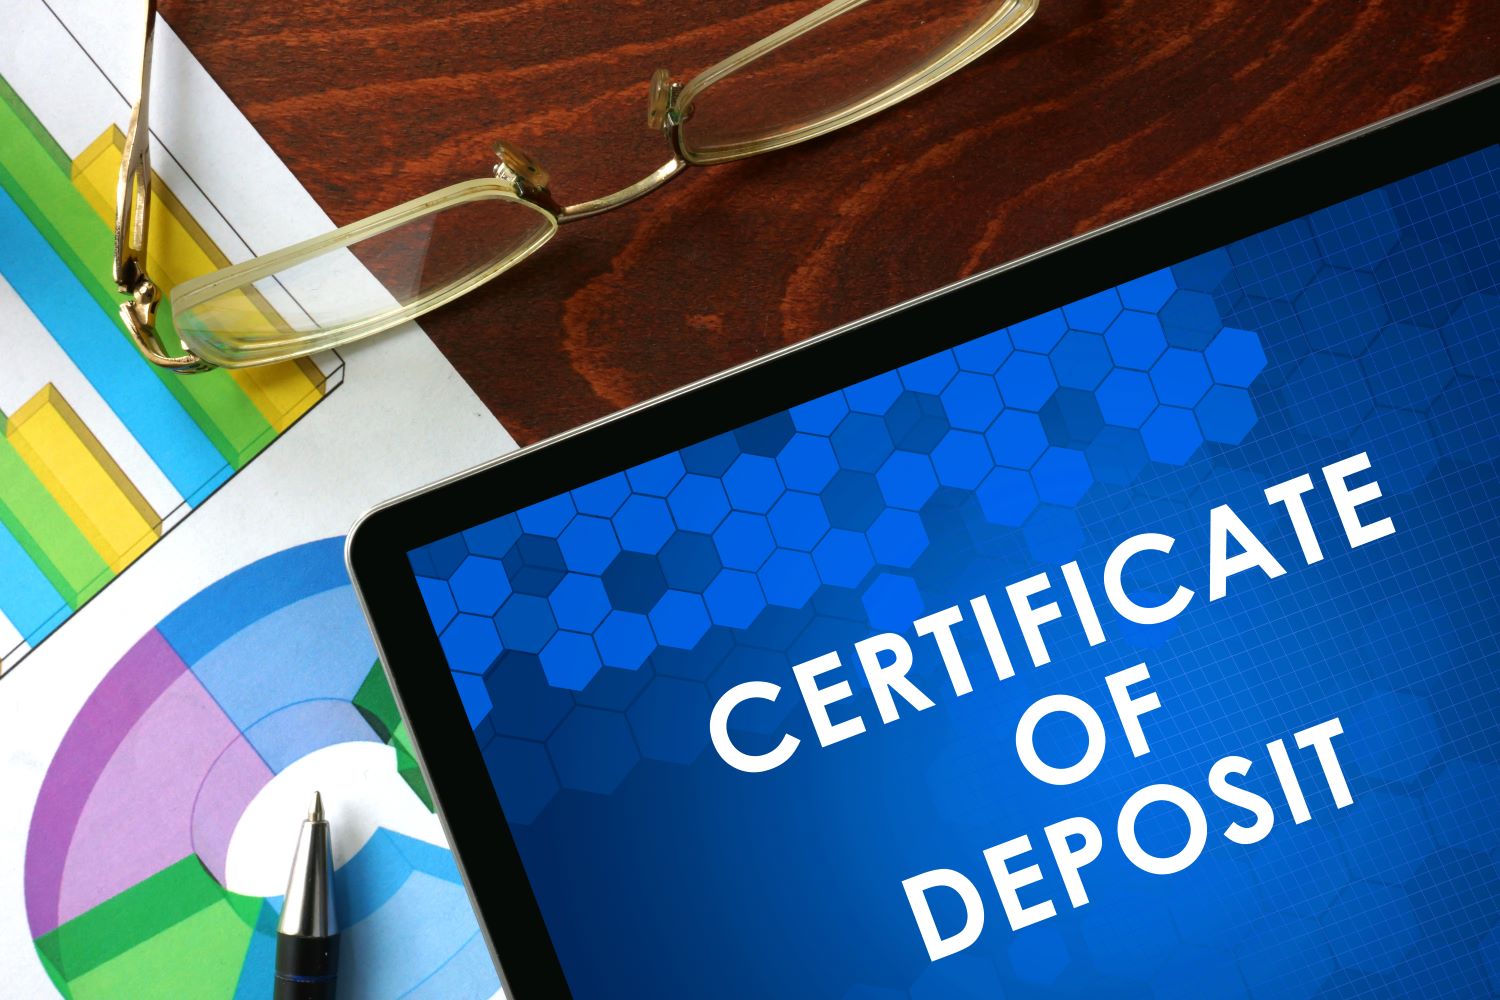 certificate of deposit savings vehicle financial institution bank credit union stable interest rates financial advisor kreitler financial